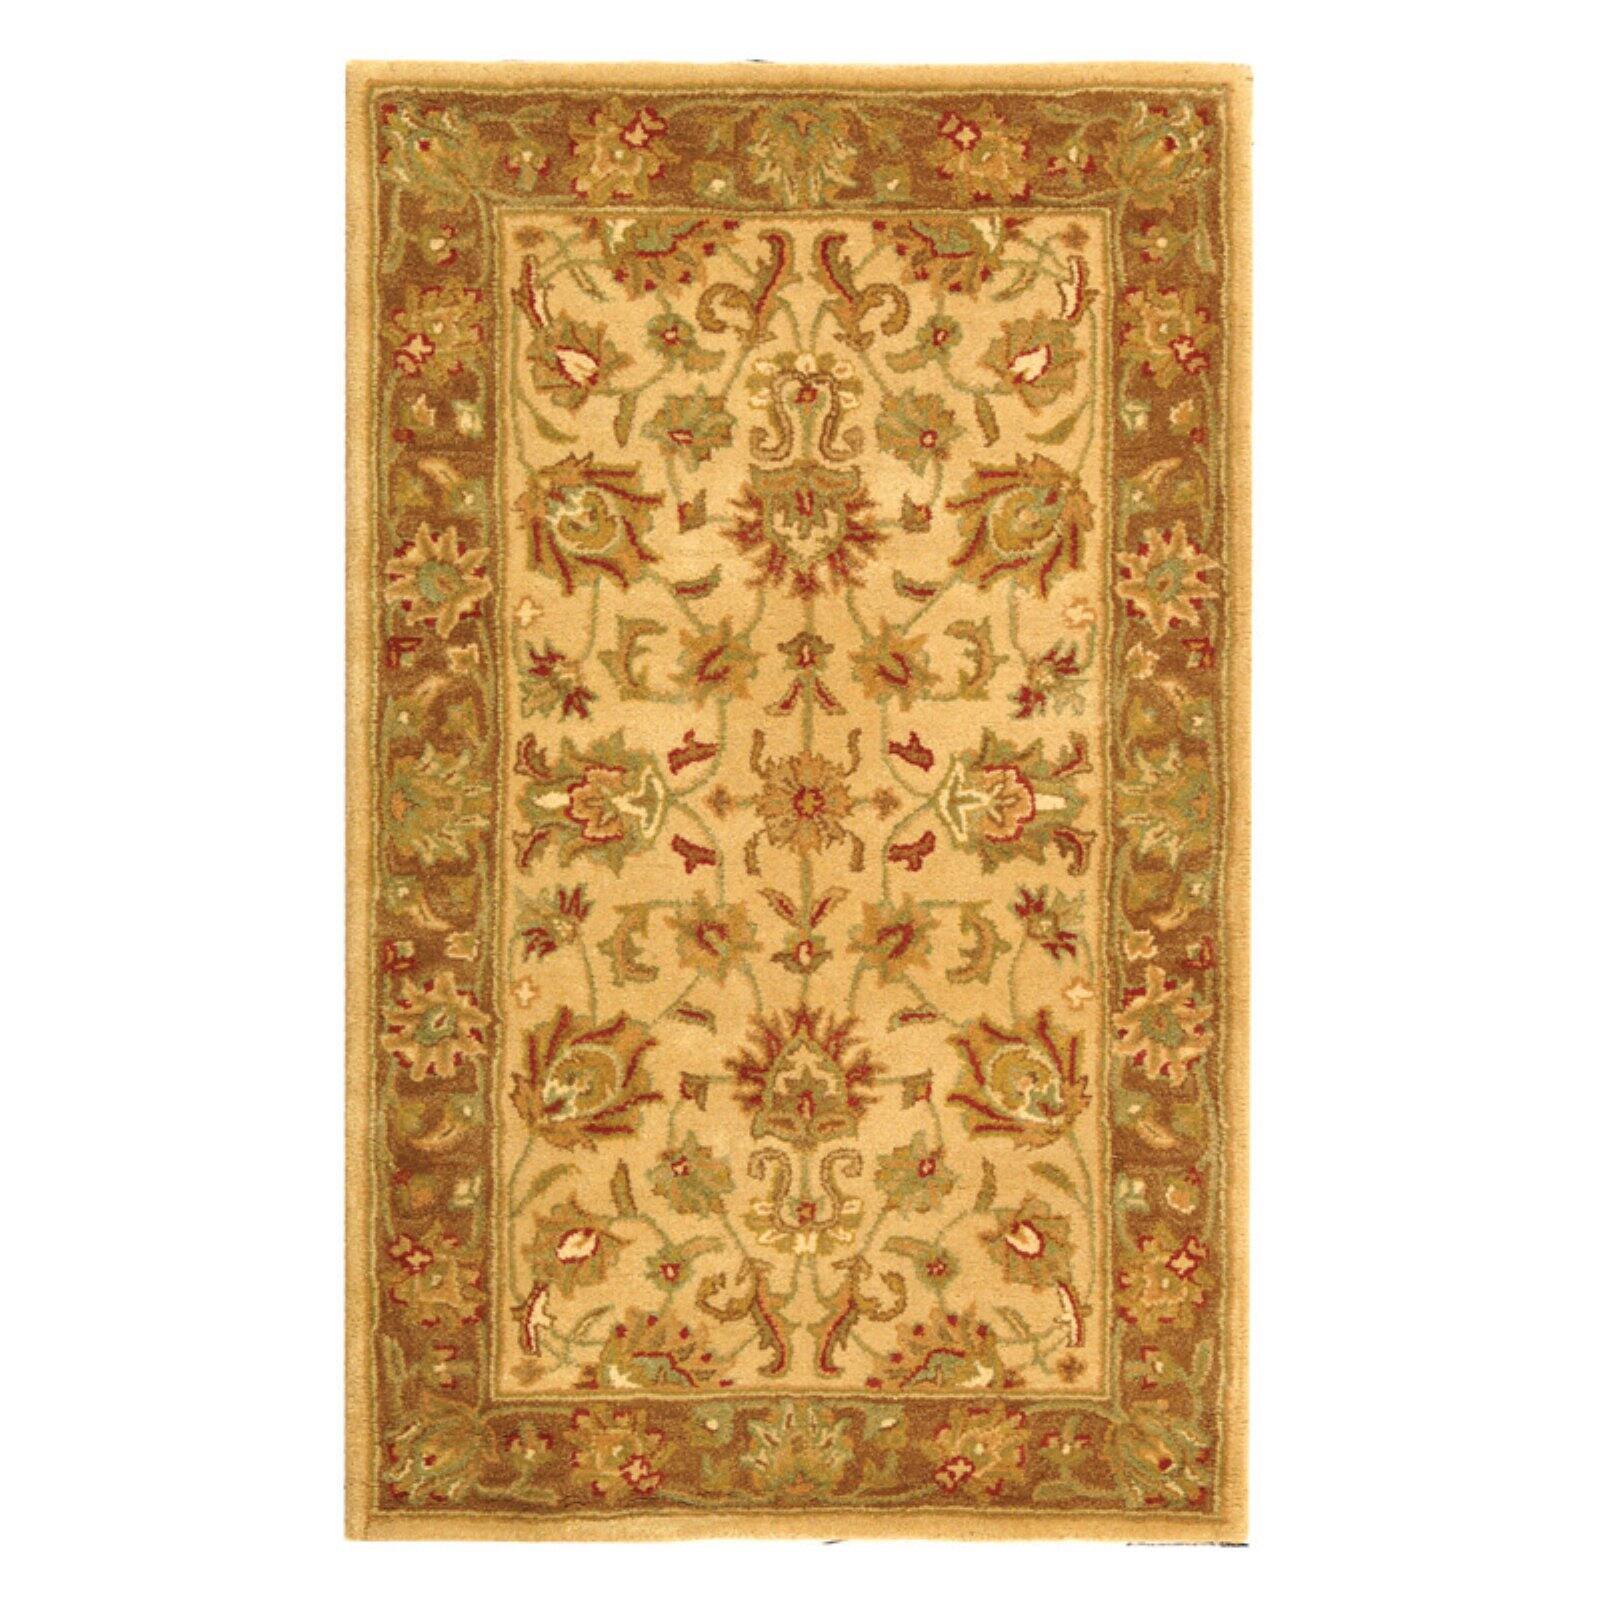 SAFAVIEH Heritage Regis Traditional Wool Area Rug, Ivory/Brown, 4' x 6' - image 5 of 9